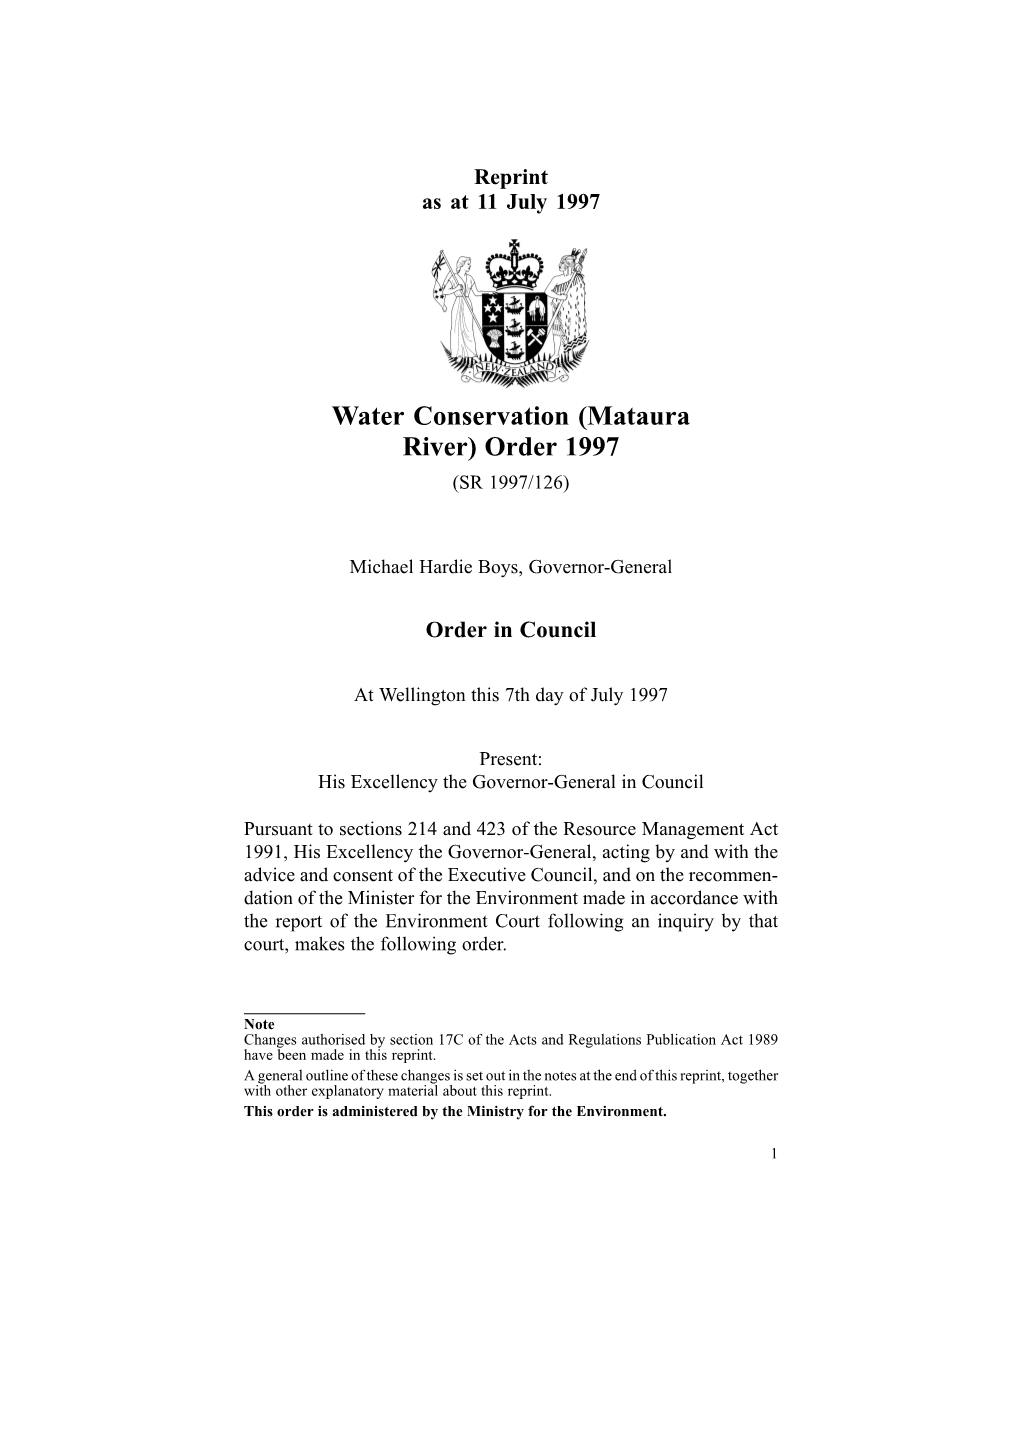 Water Conservation (Mataura River) Order 1997 (SR 1997/126)